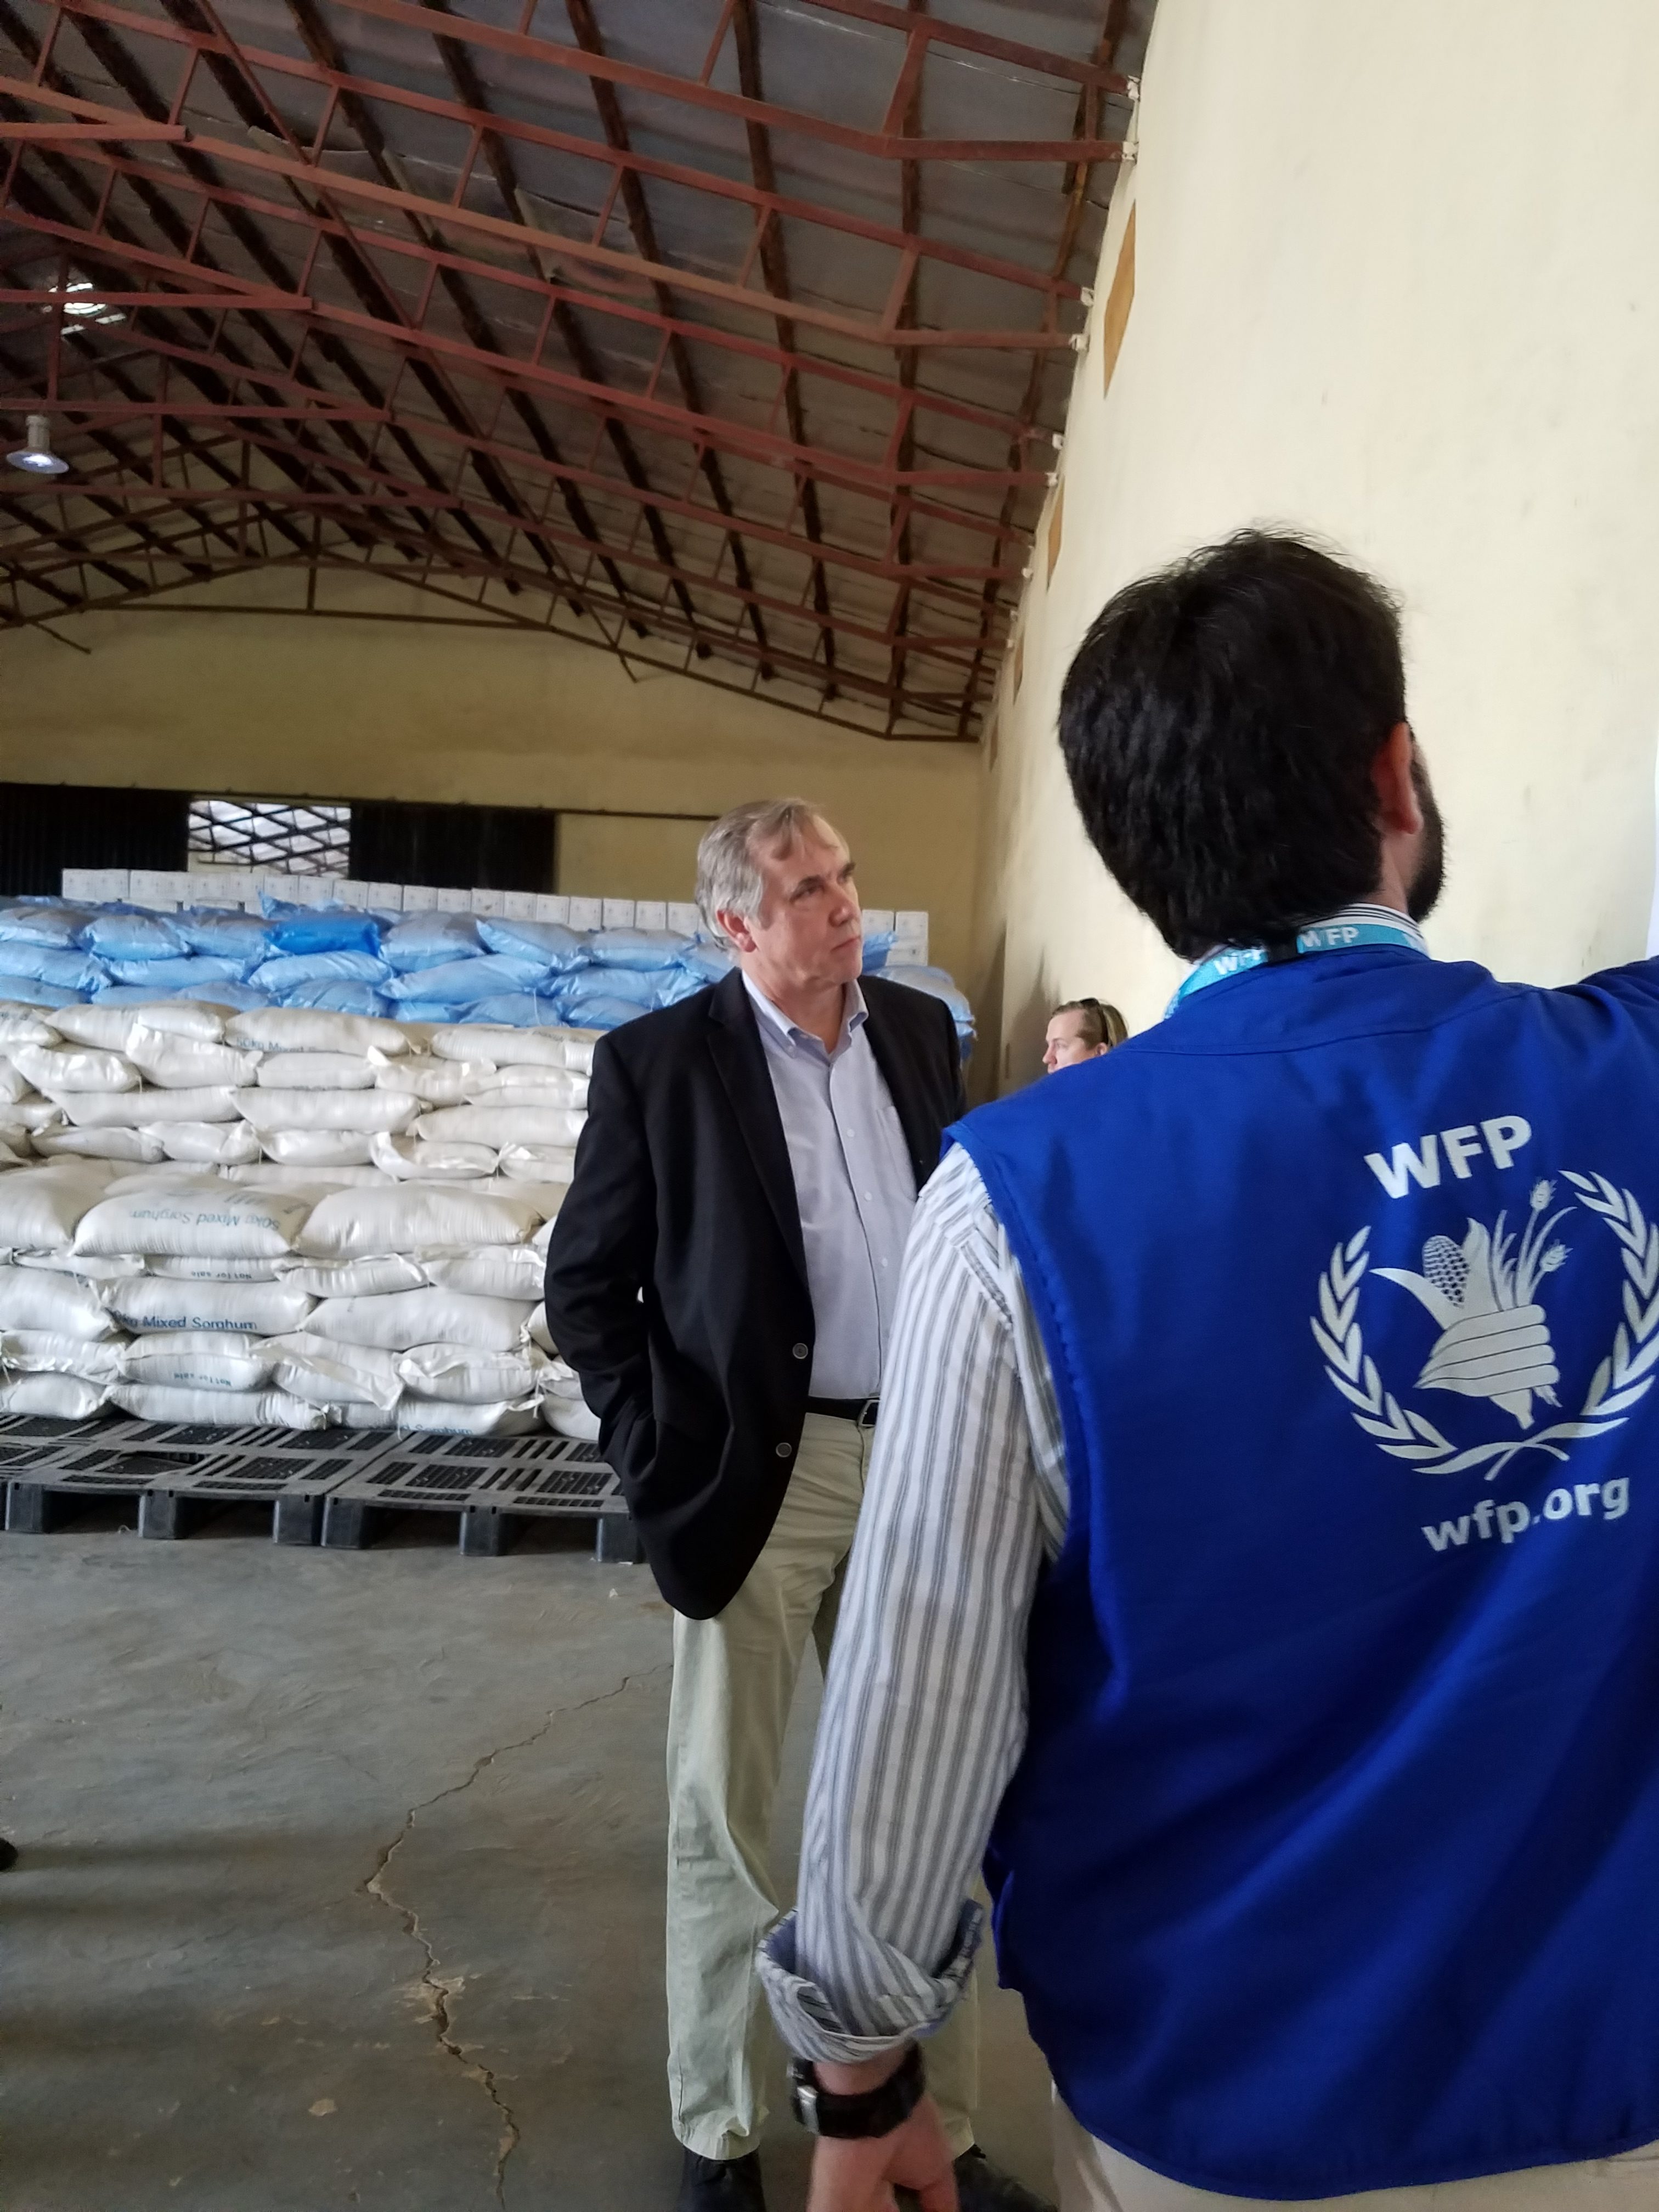 Senator Jeff Merkley and WFP staff discuss how to fight famine